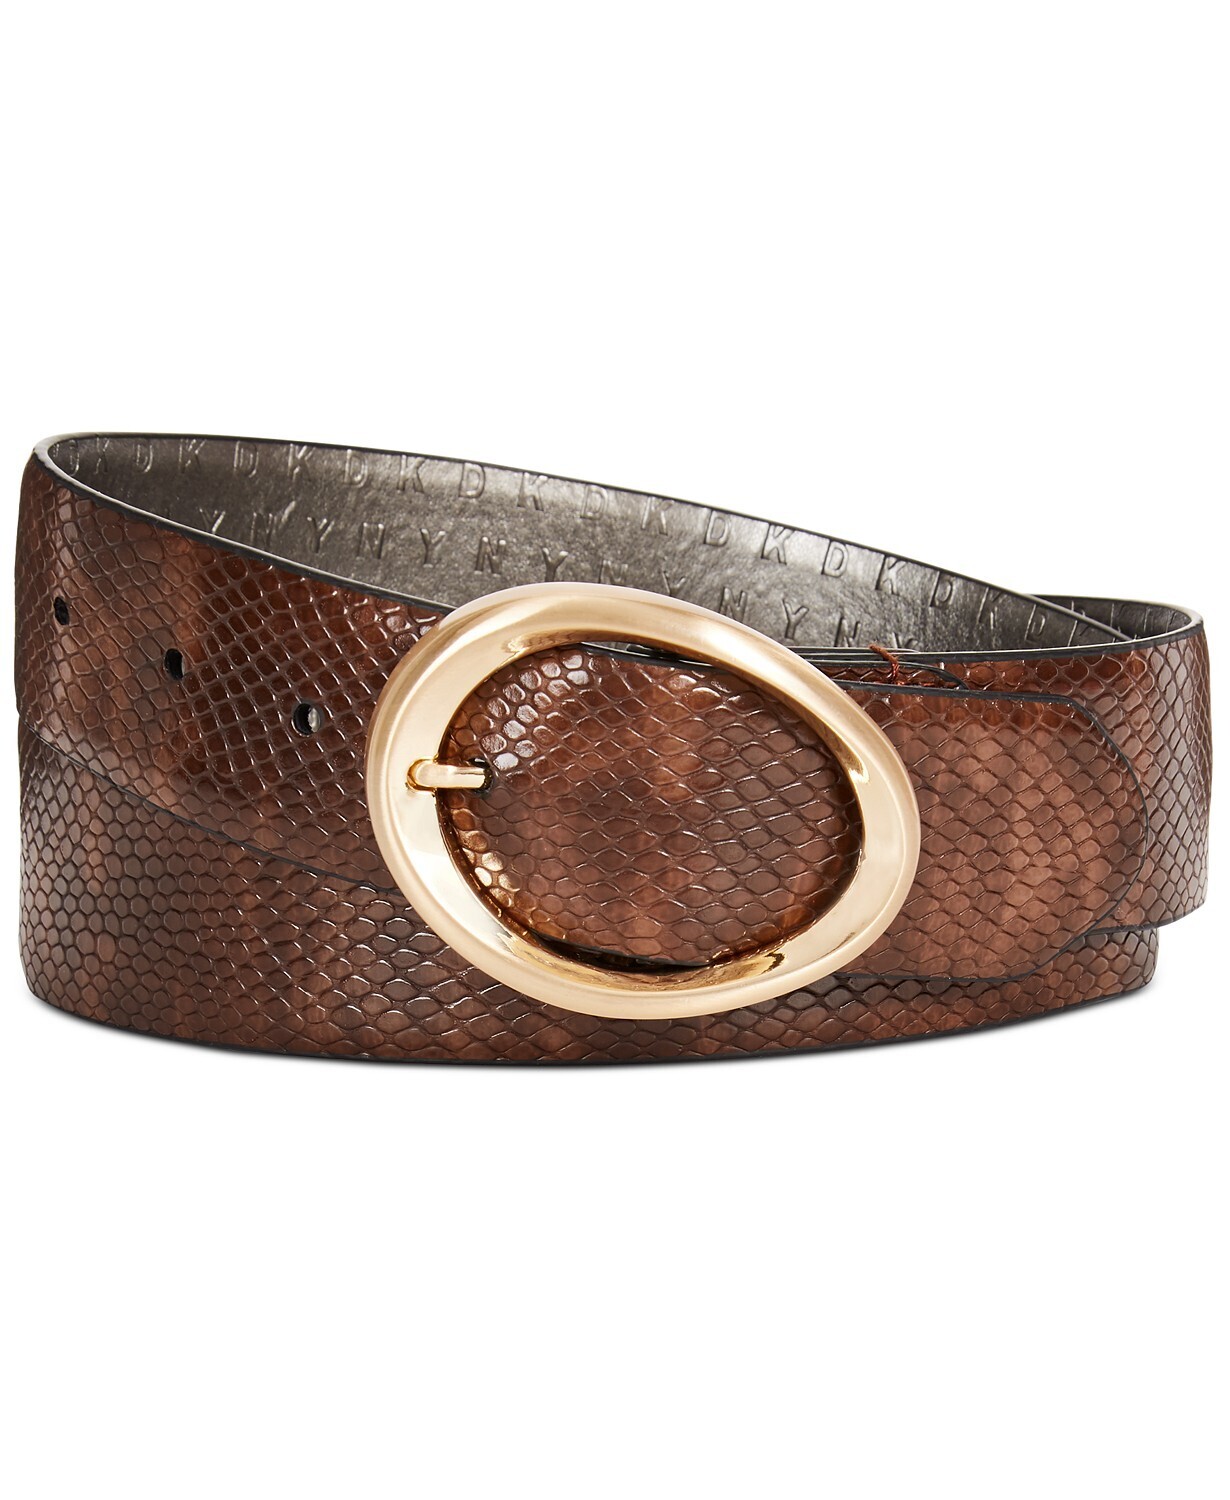 DKNY Women's Snake-Embossed Belt with Oval Buckle Belt, Brown, L